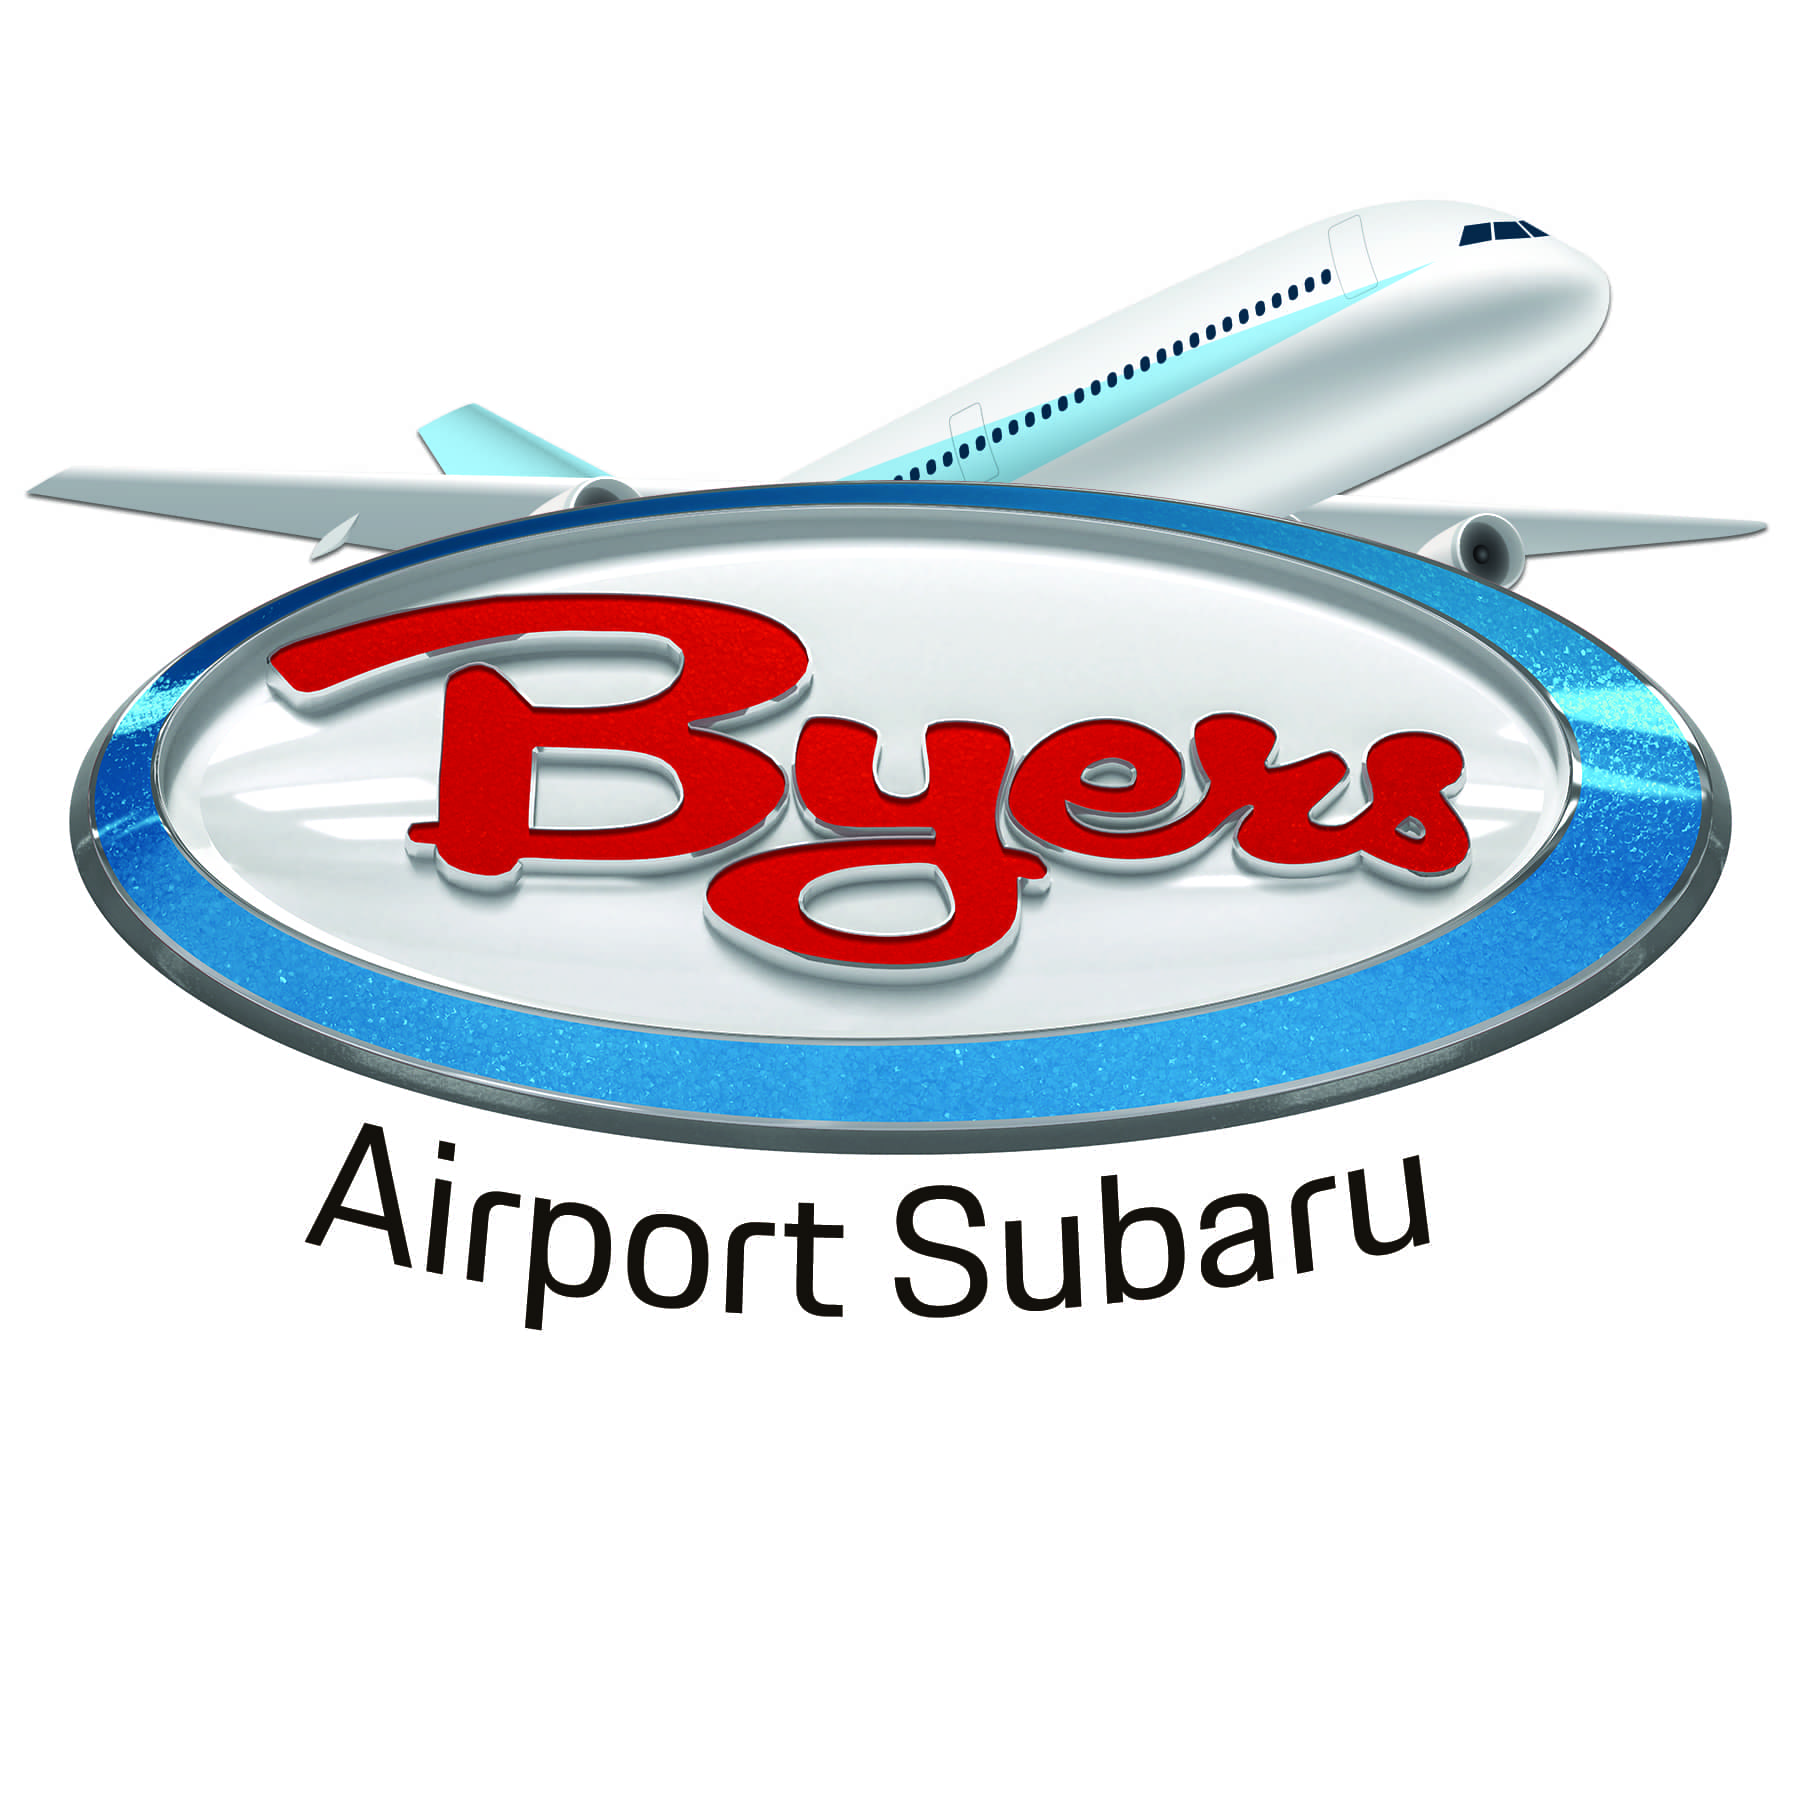 byers airport subaru logo